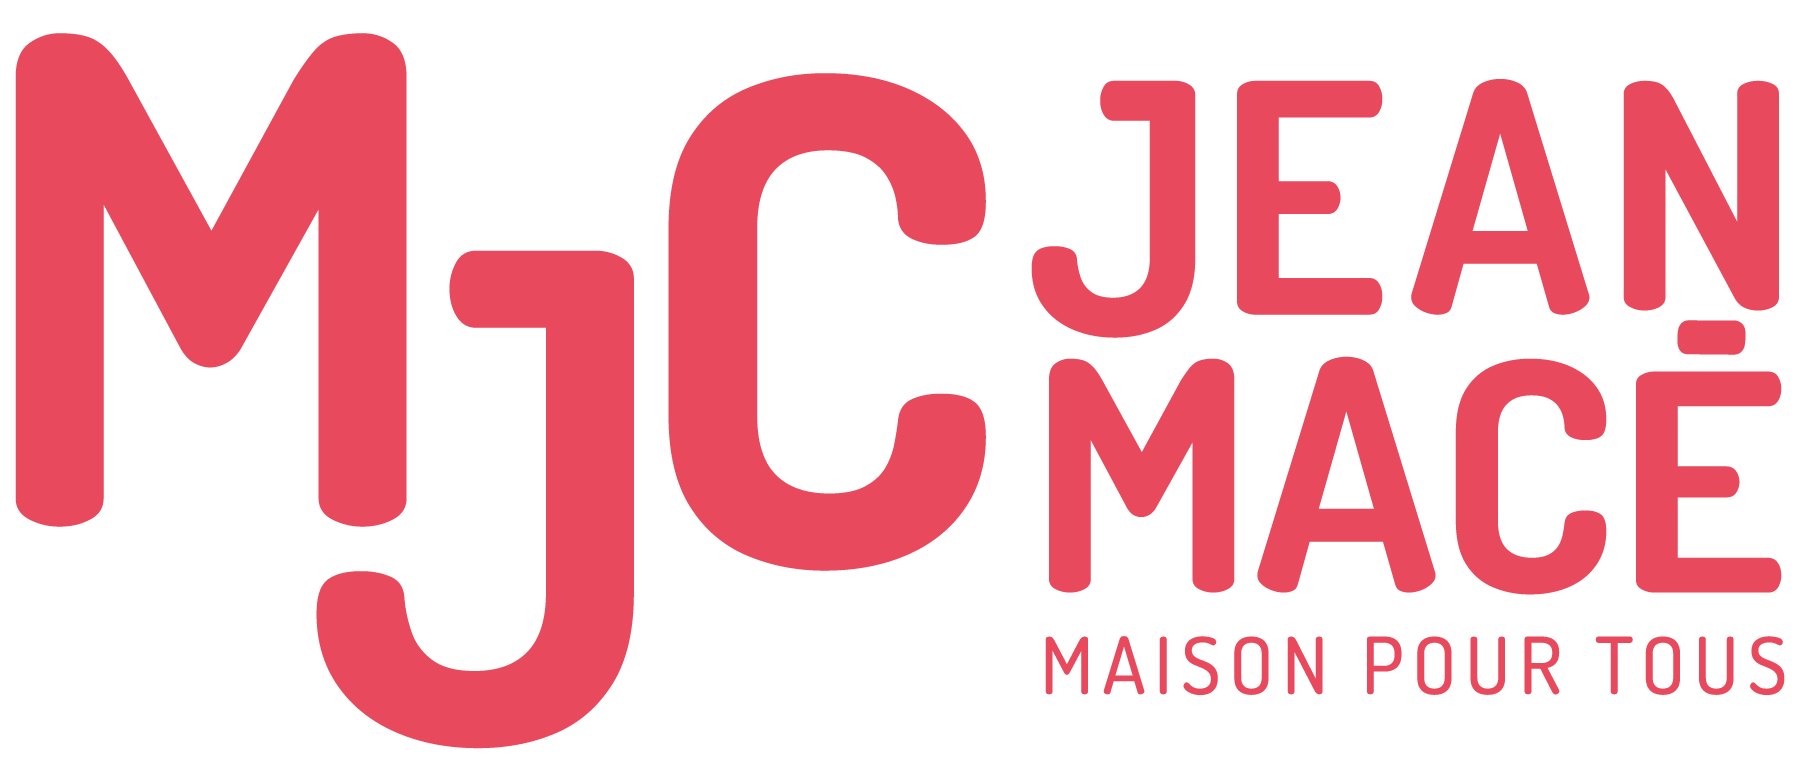 MJC Jean Macé